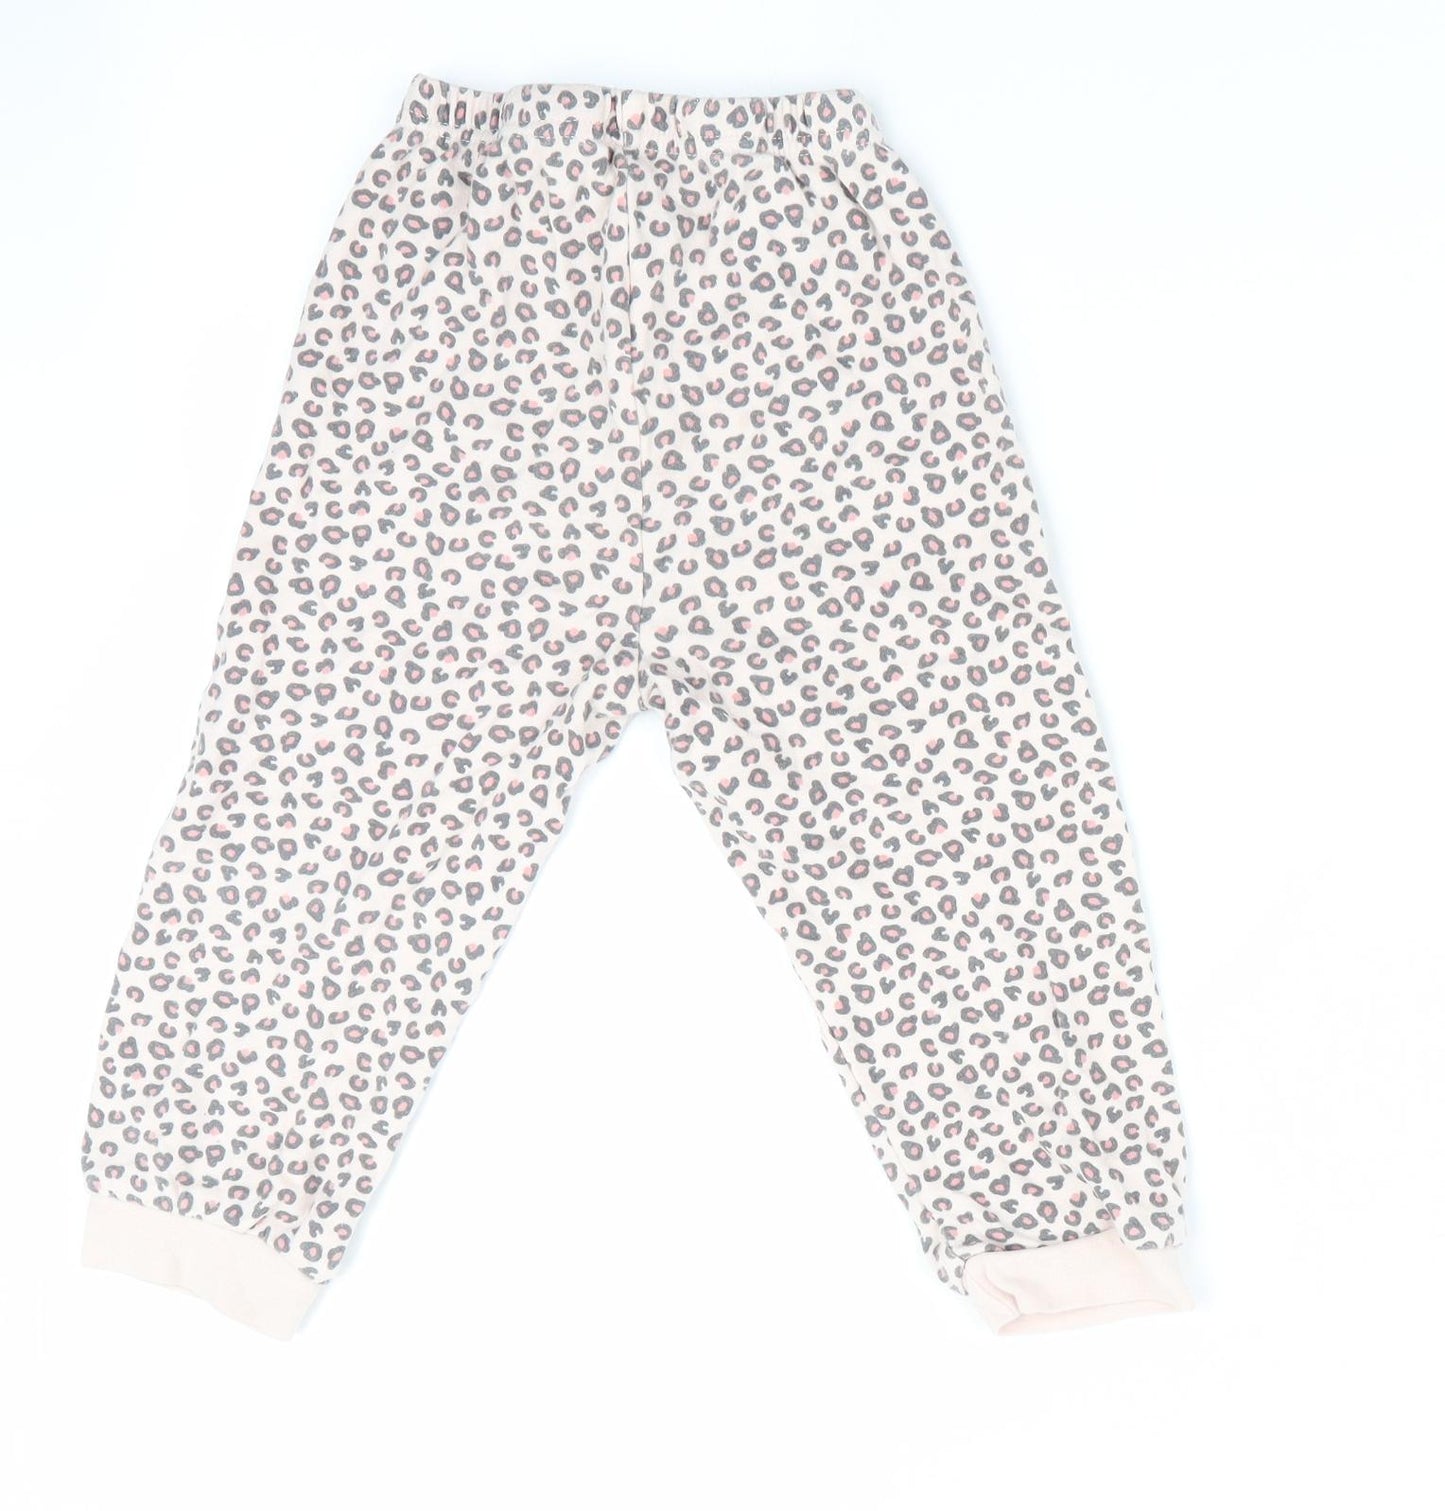 Primark Girls Pink Animal Print   Pyjama Pants Size 2-3 Years